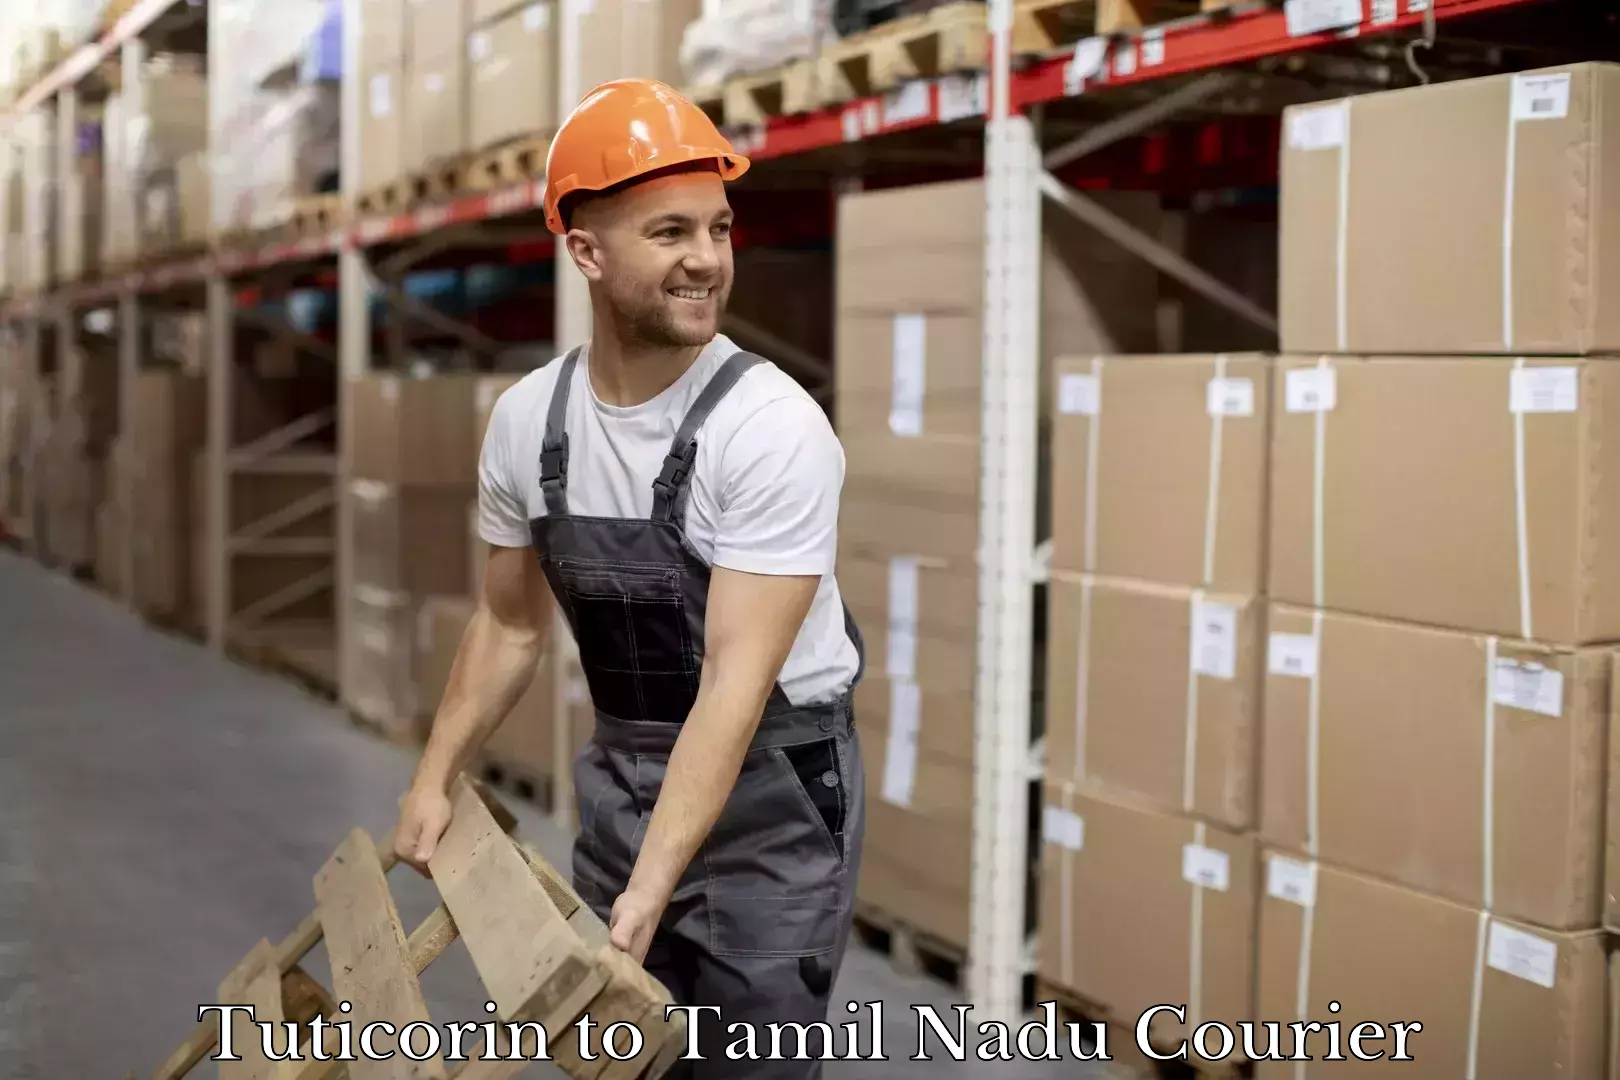 Logistics service provider Tuticorin to Tamil Nadu